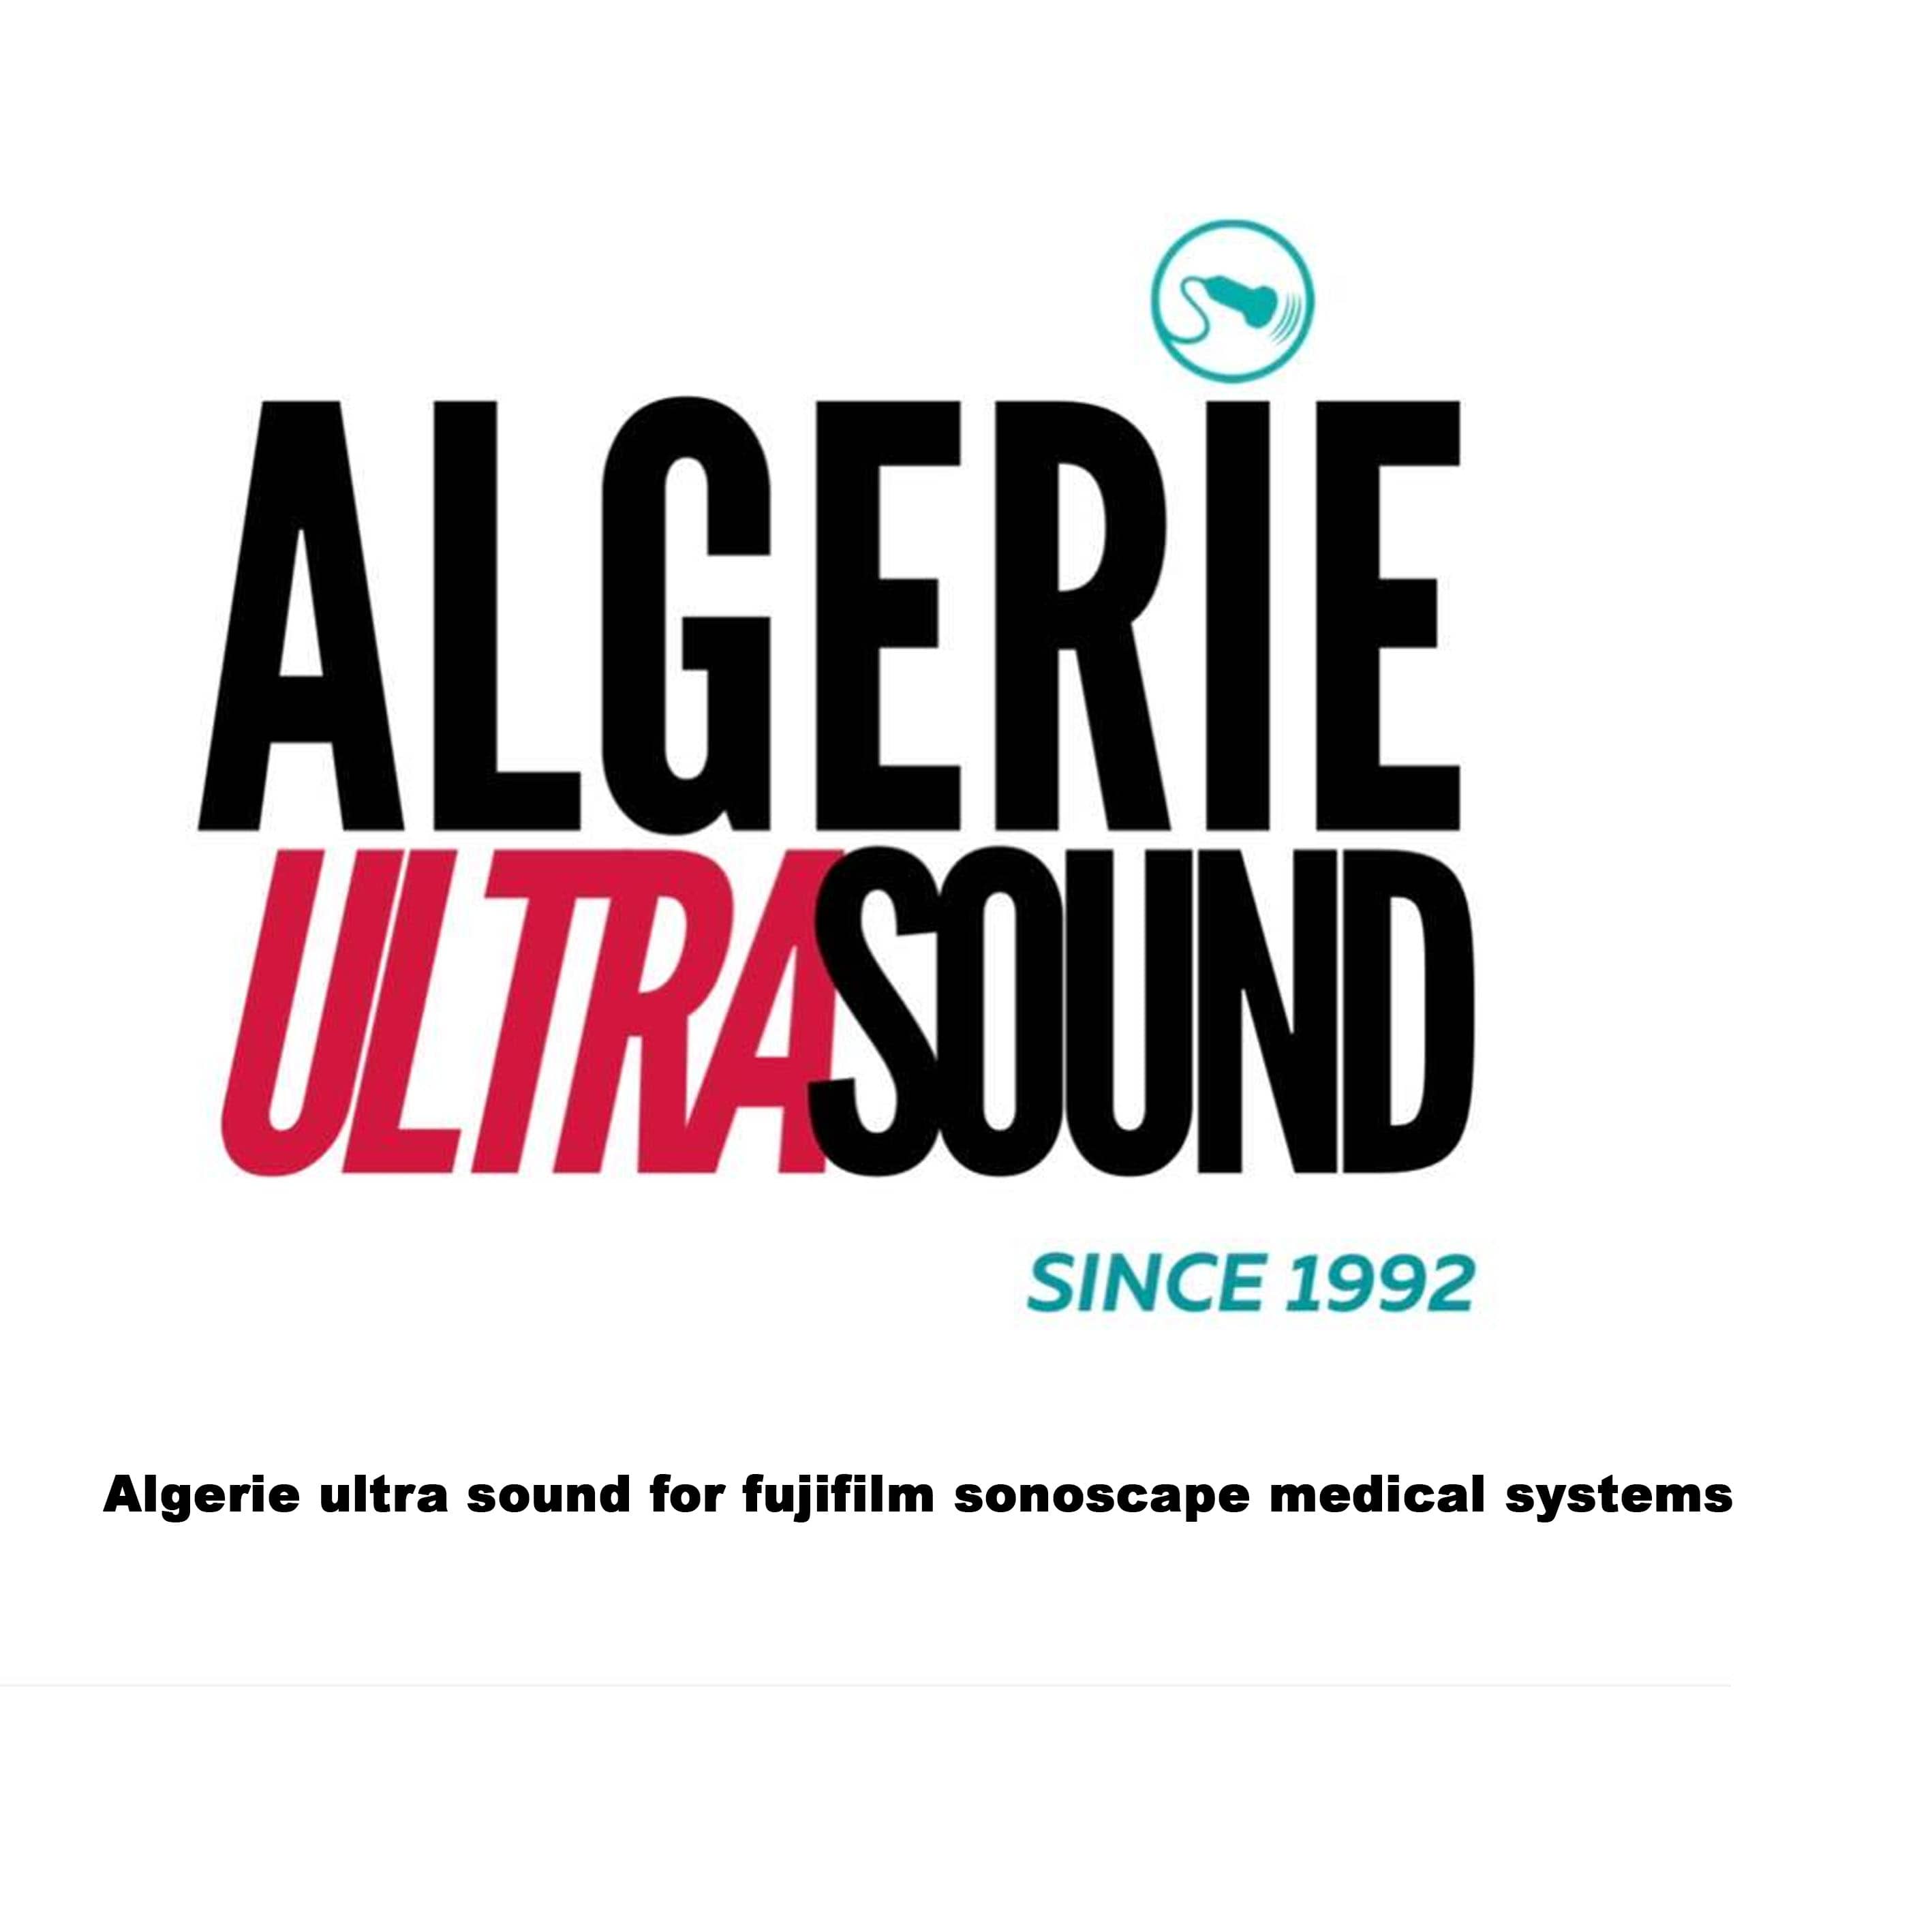 Algerie ultrasound